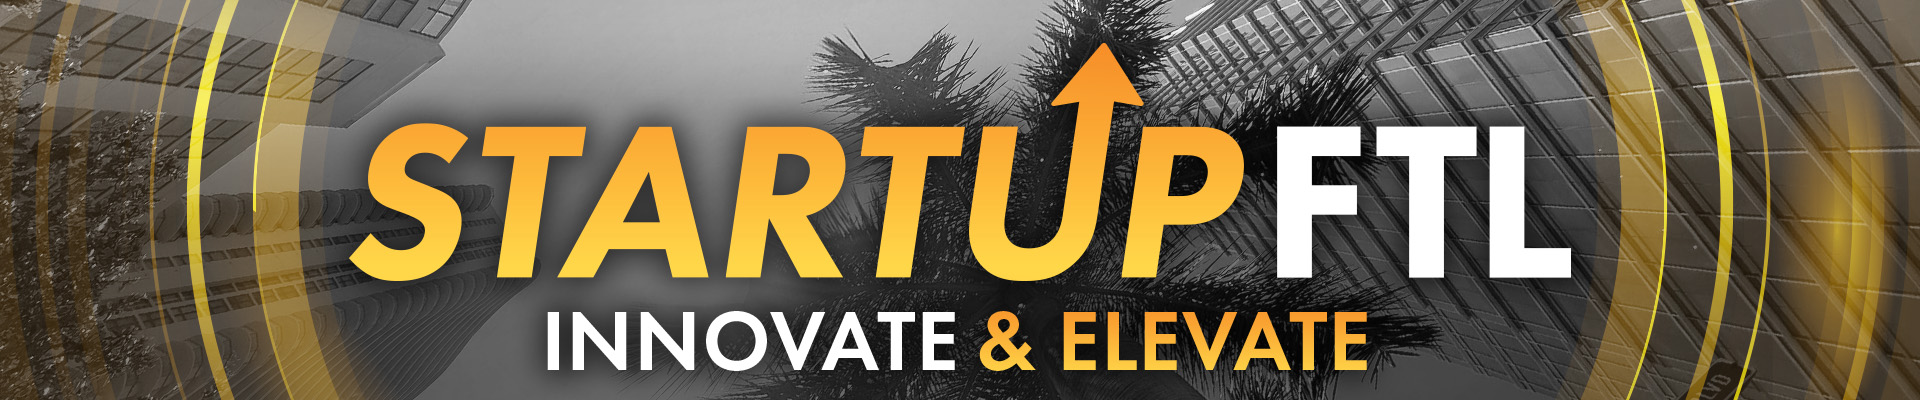 8774 Startup FTL Innovate Elevater_WEB Banner